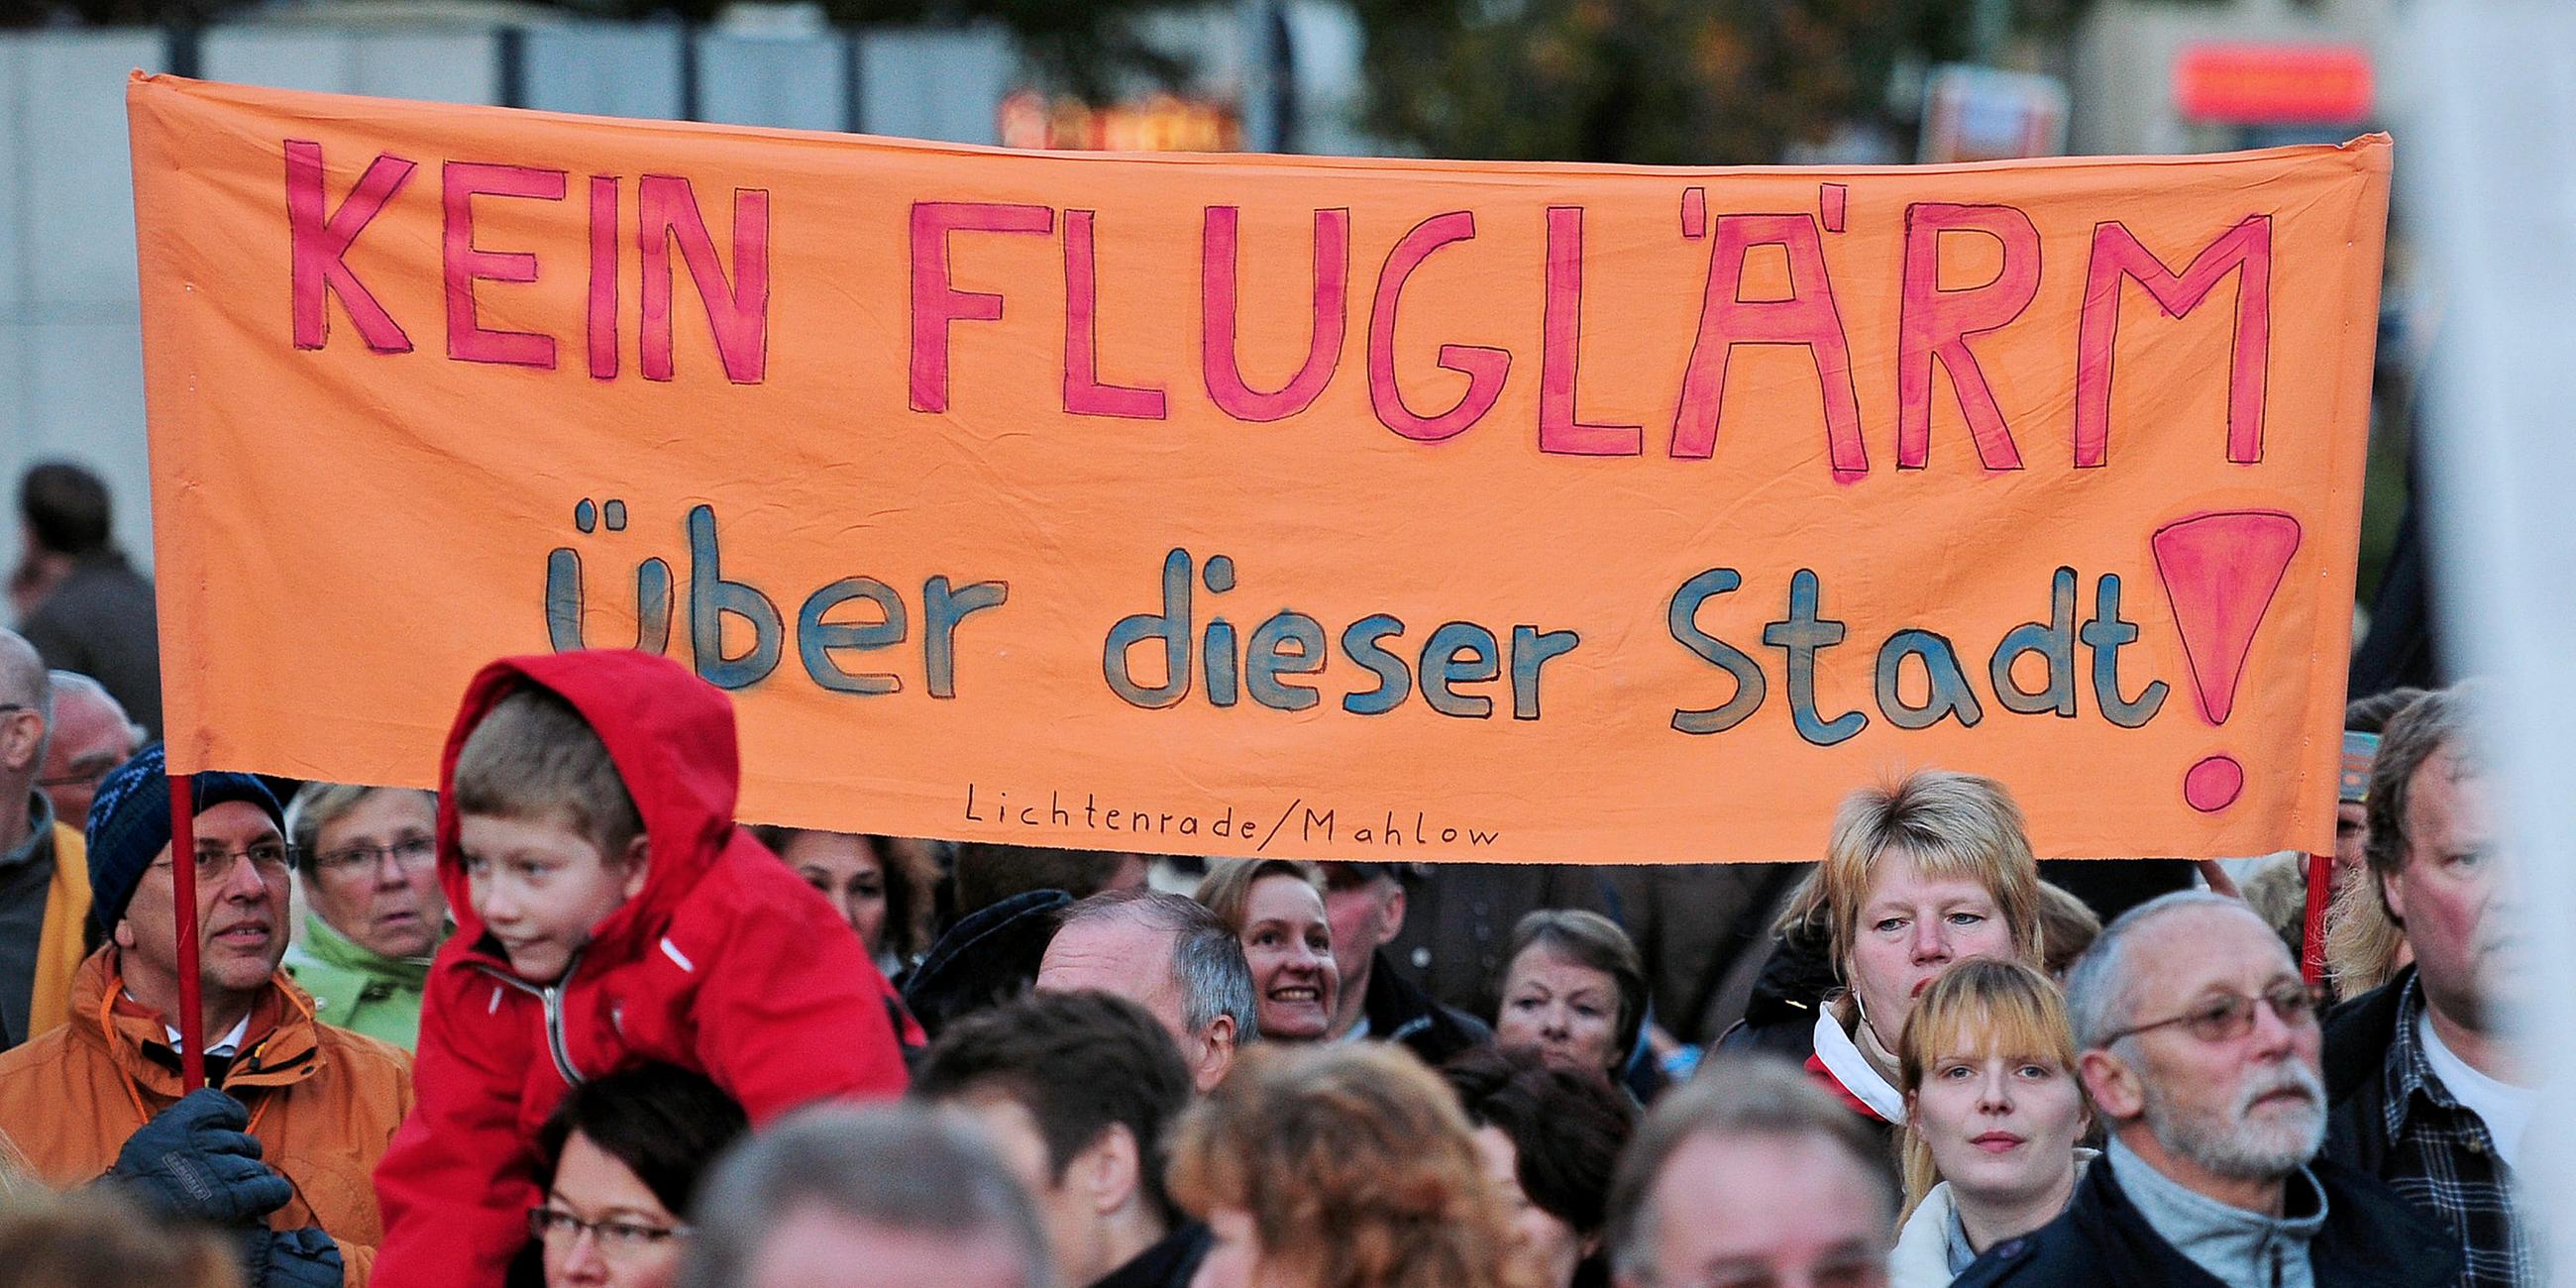 Archiv: Demonstranten protstieren am 18.10.2010 vor dem Bahnhof Lichtenrade in Berlin